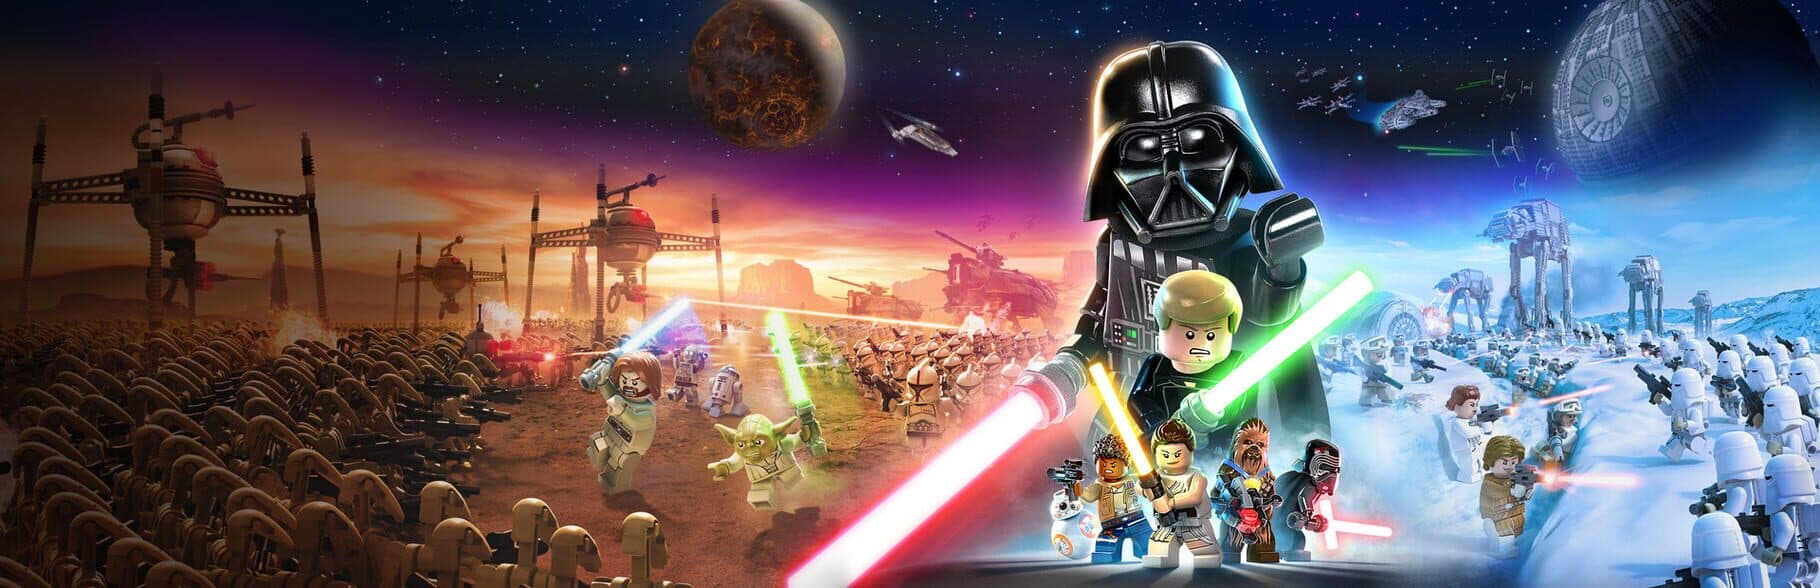 LEGO Star Wars: The Skywalker Saga Image